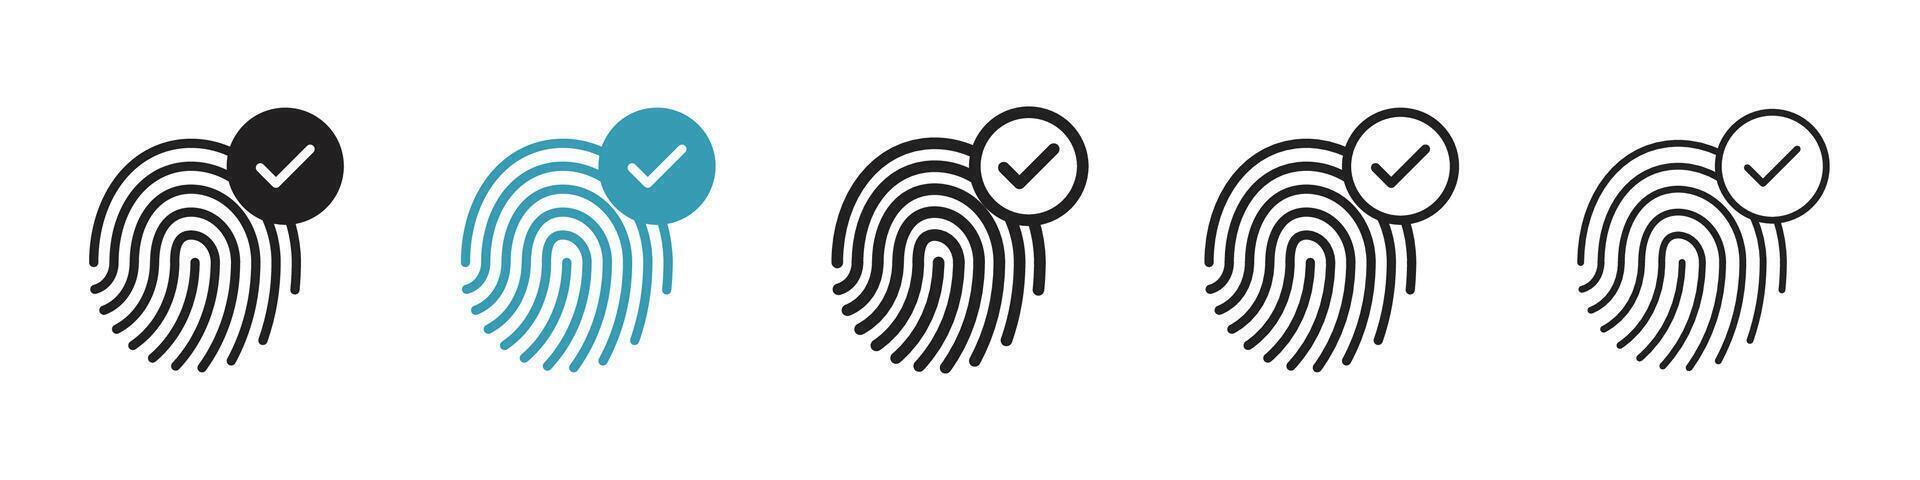 biometrisk säkerhet ikon vektor